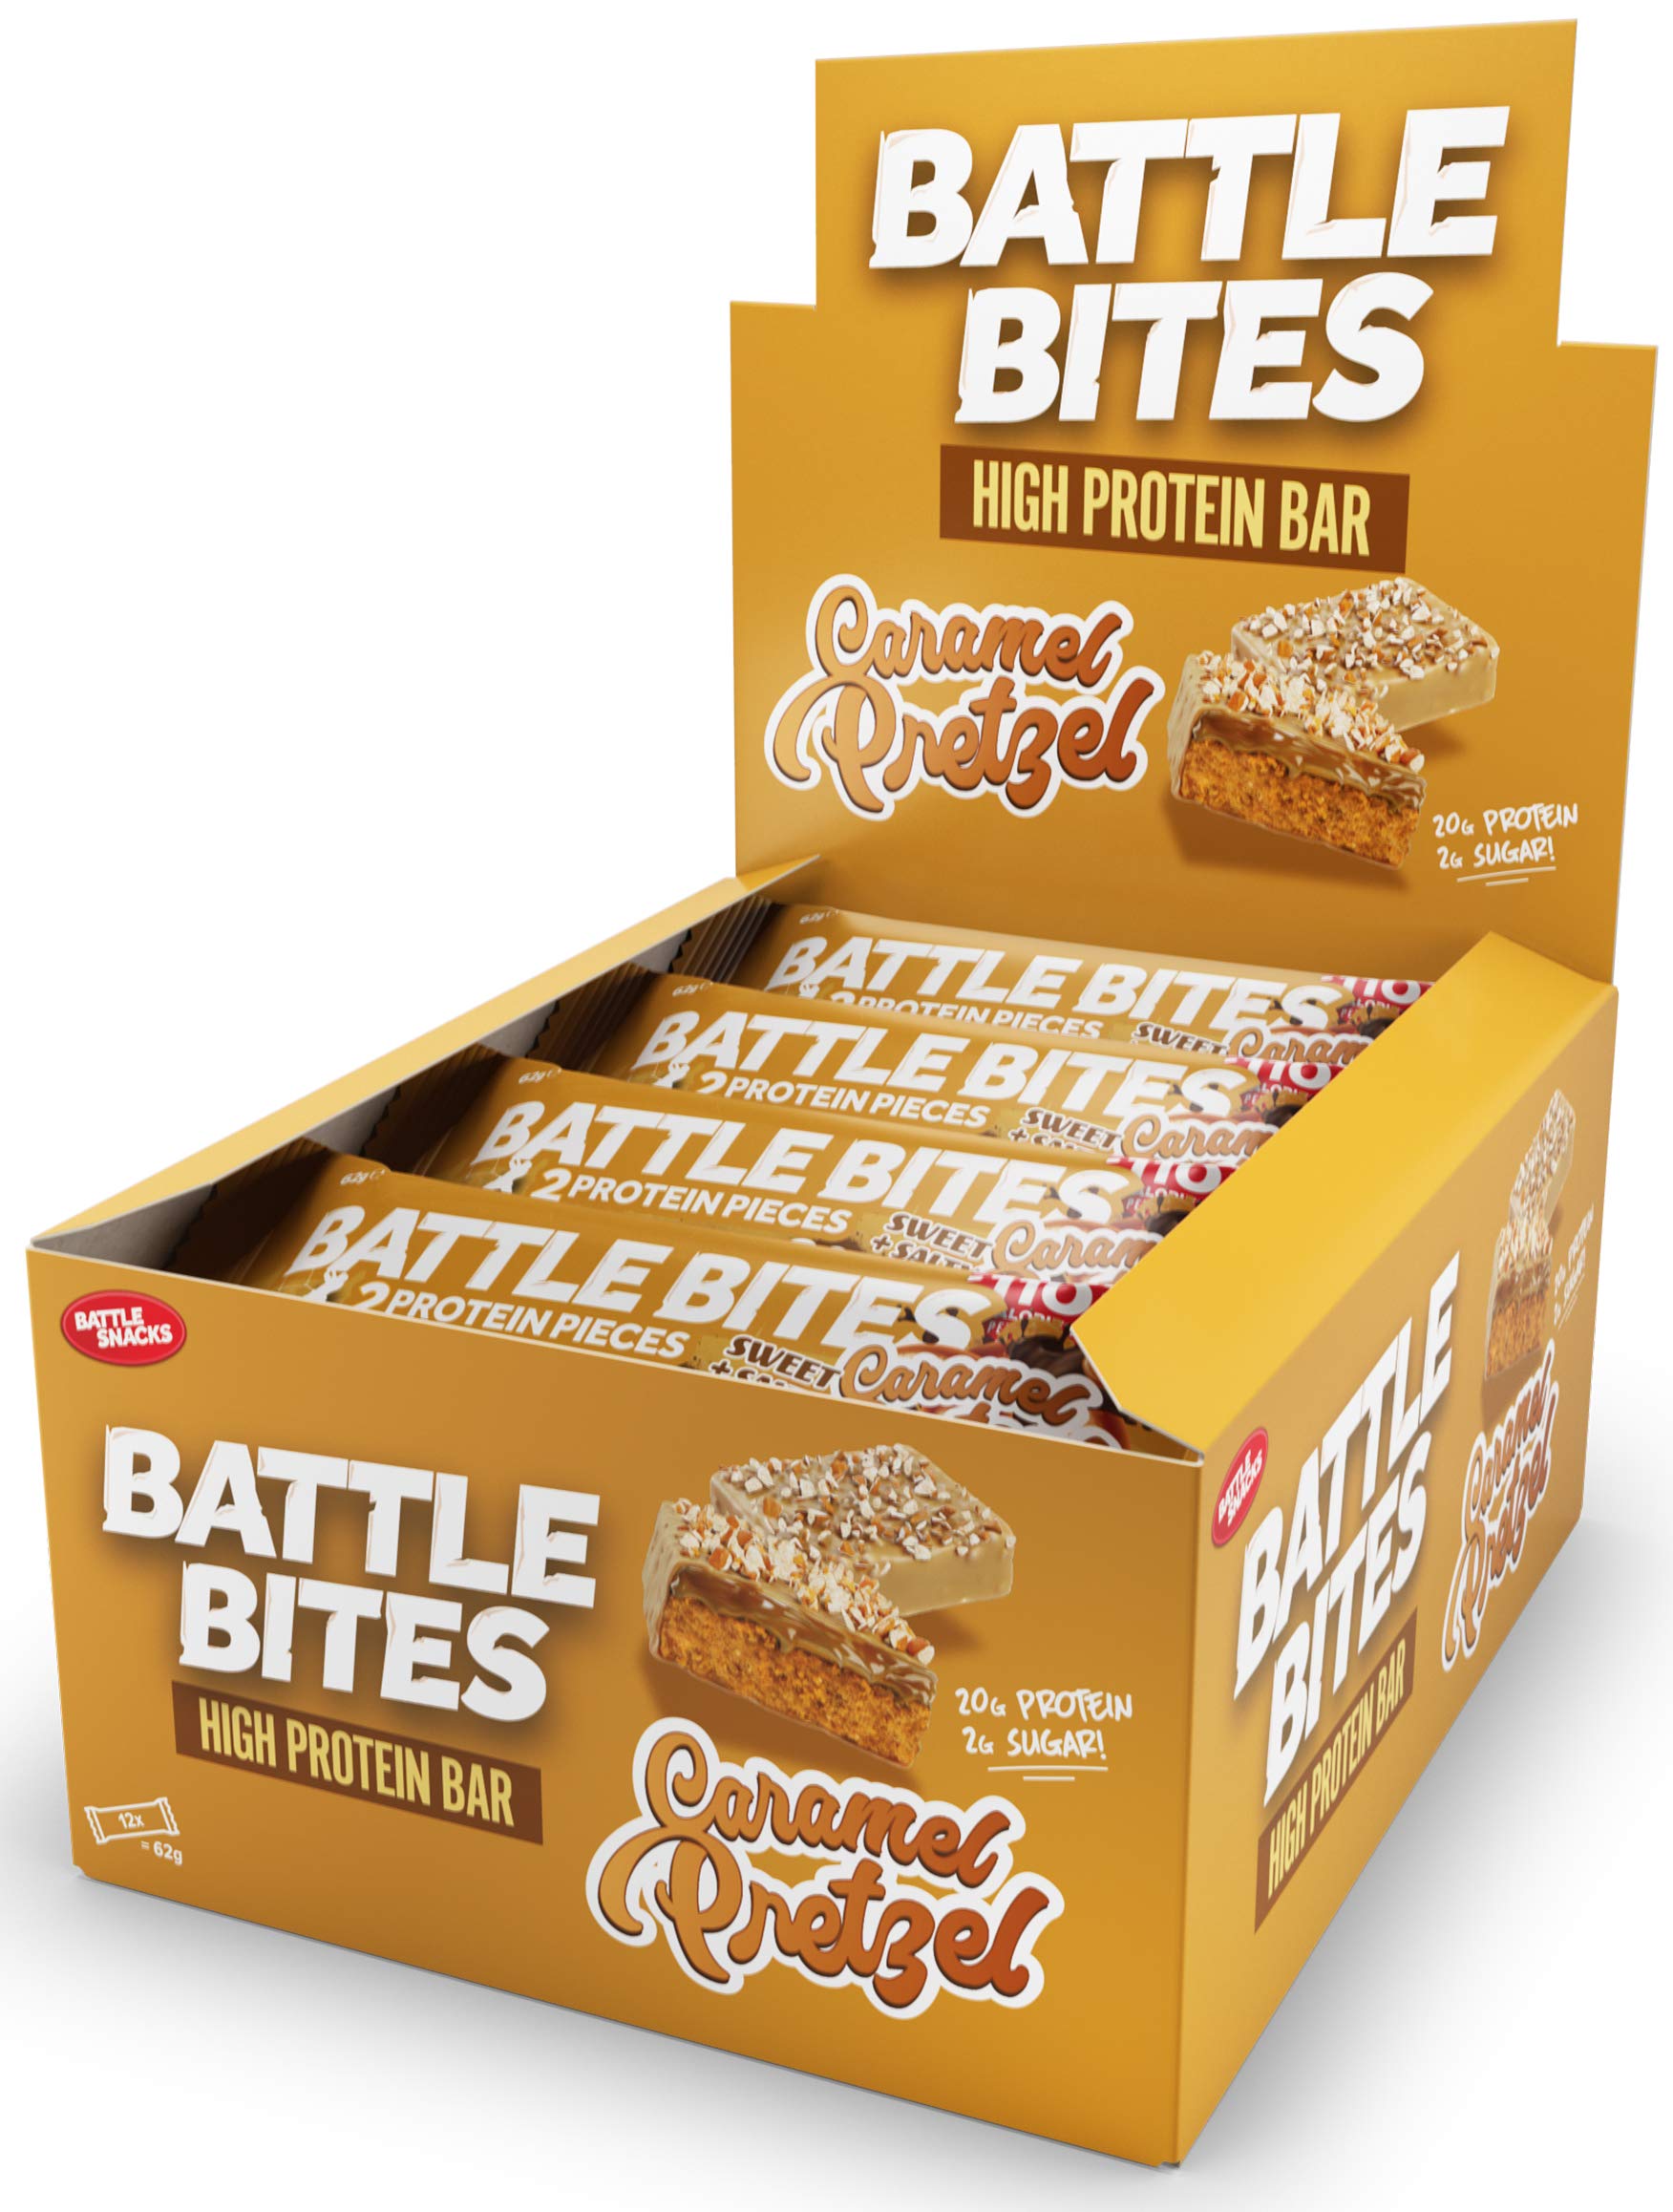 Battle Bites High Protein and Low Carb/Sugar Bars 12 x 62 g - Caramel Pretzel